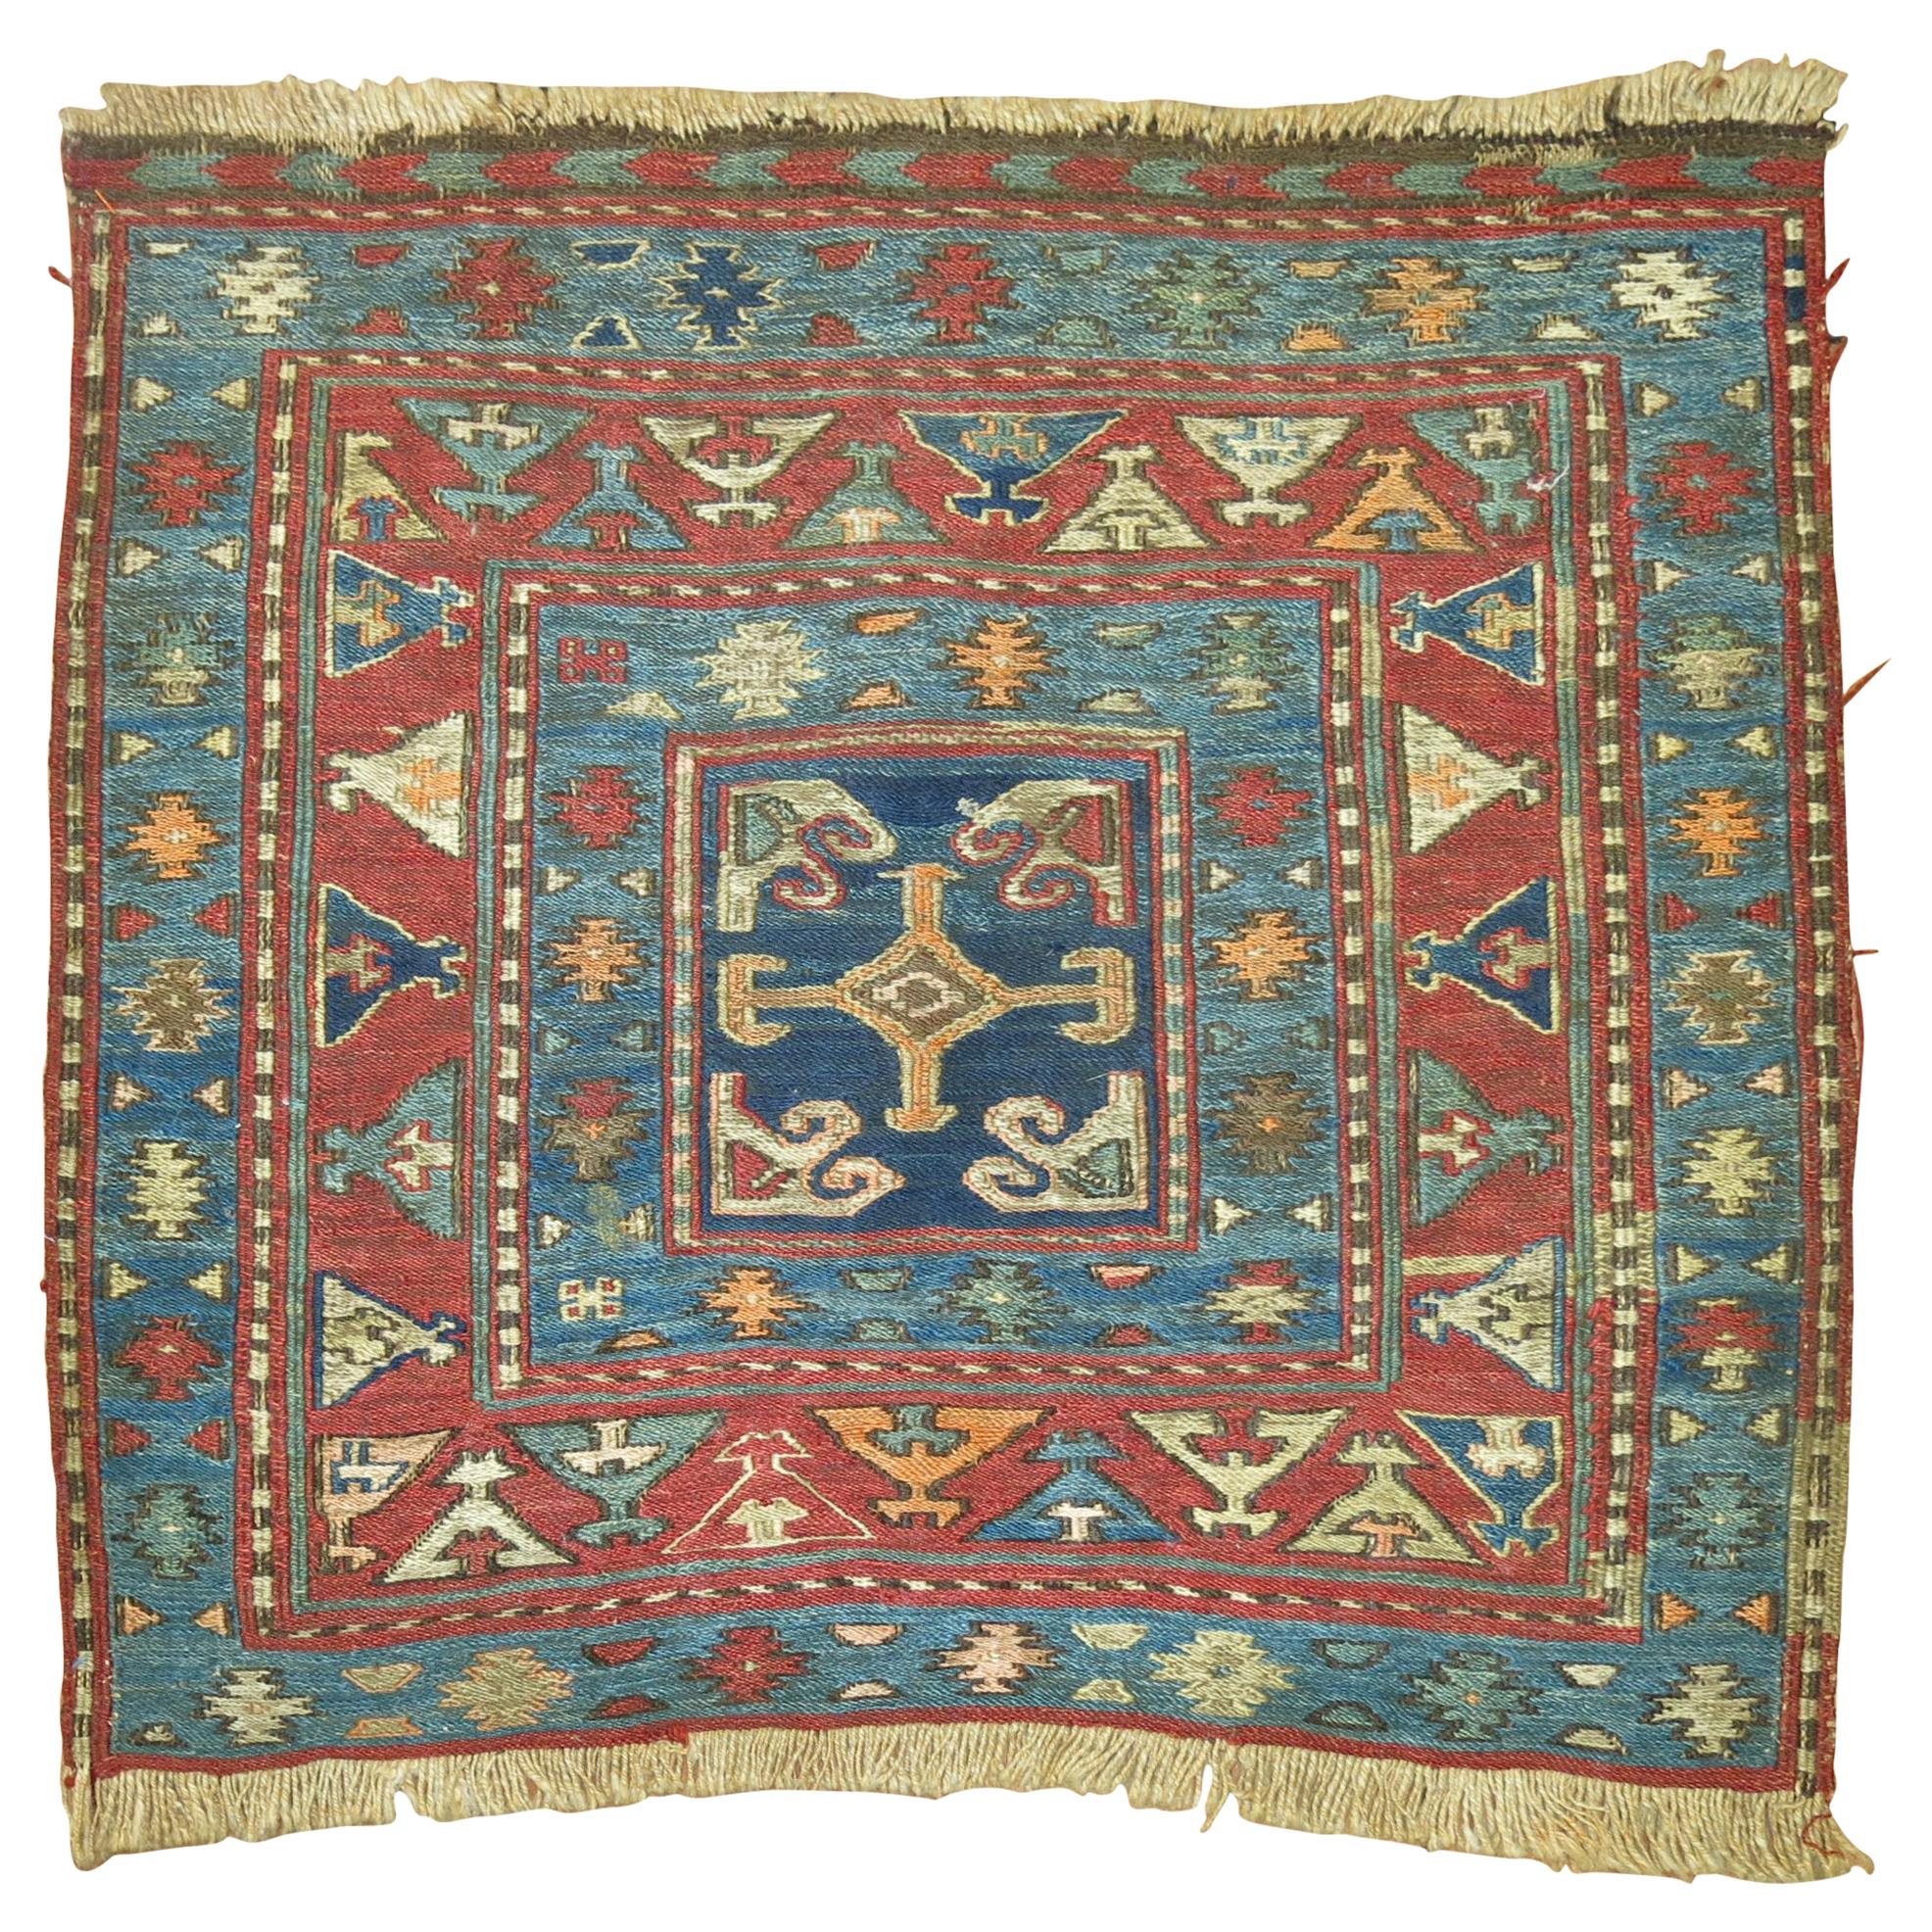 19th Century Tribal Antique Persian Soumac Flat-Weave Rustic Rug